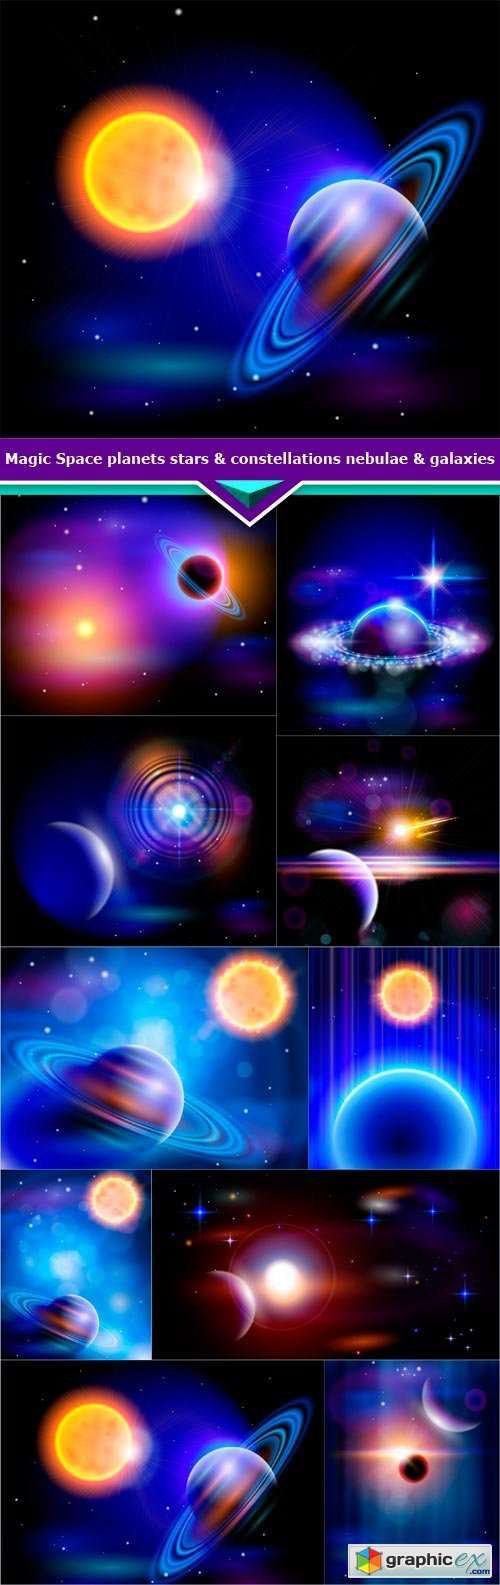 Magic Space planets stars & constellations nebulae & galaxies 10X JPEG